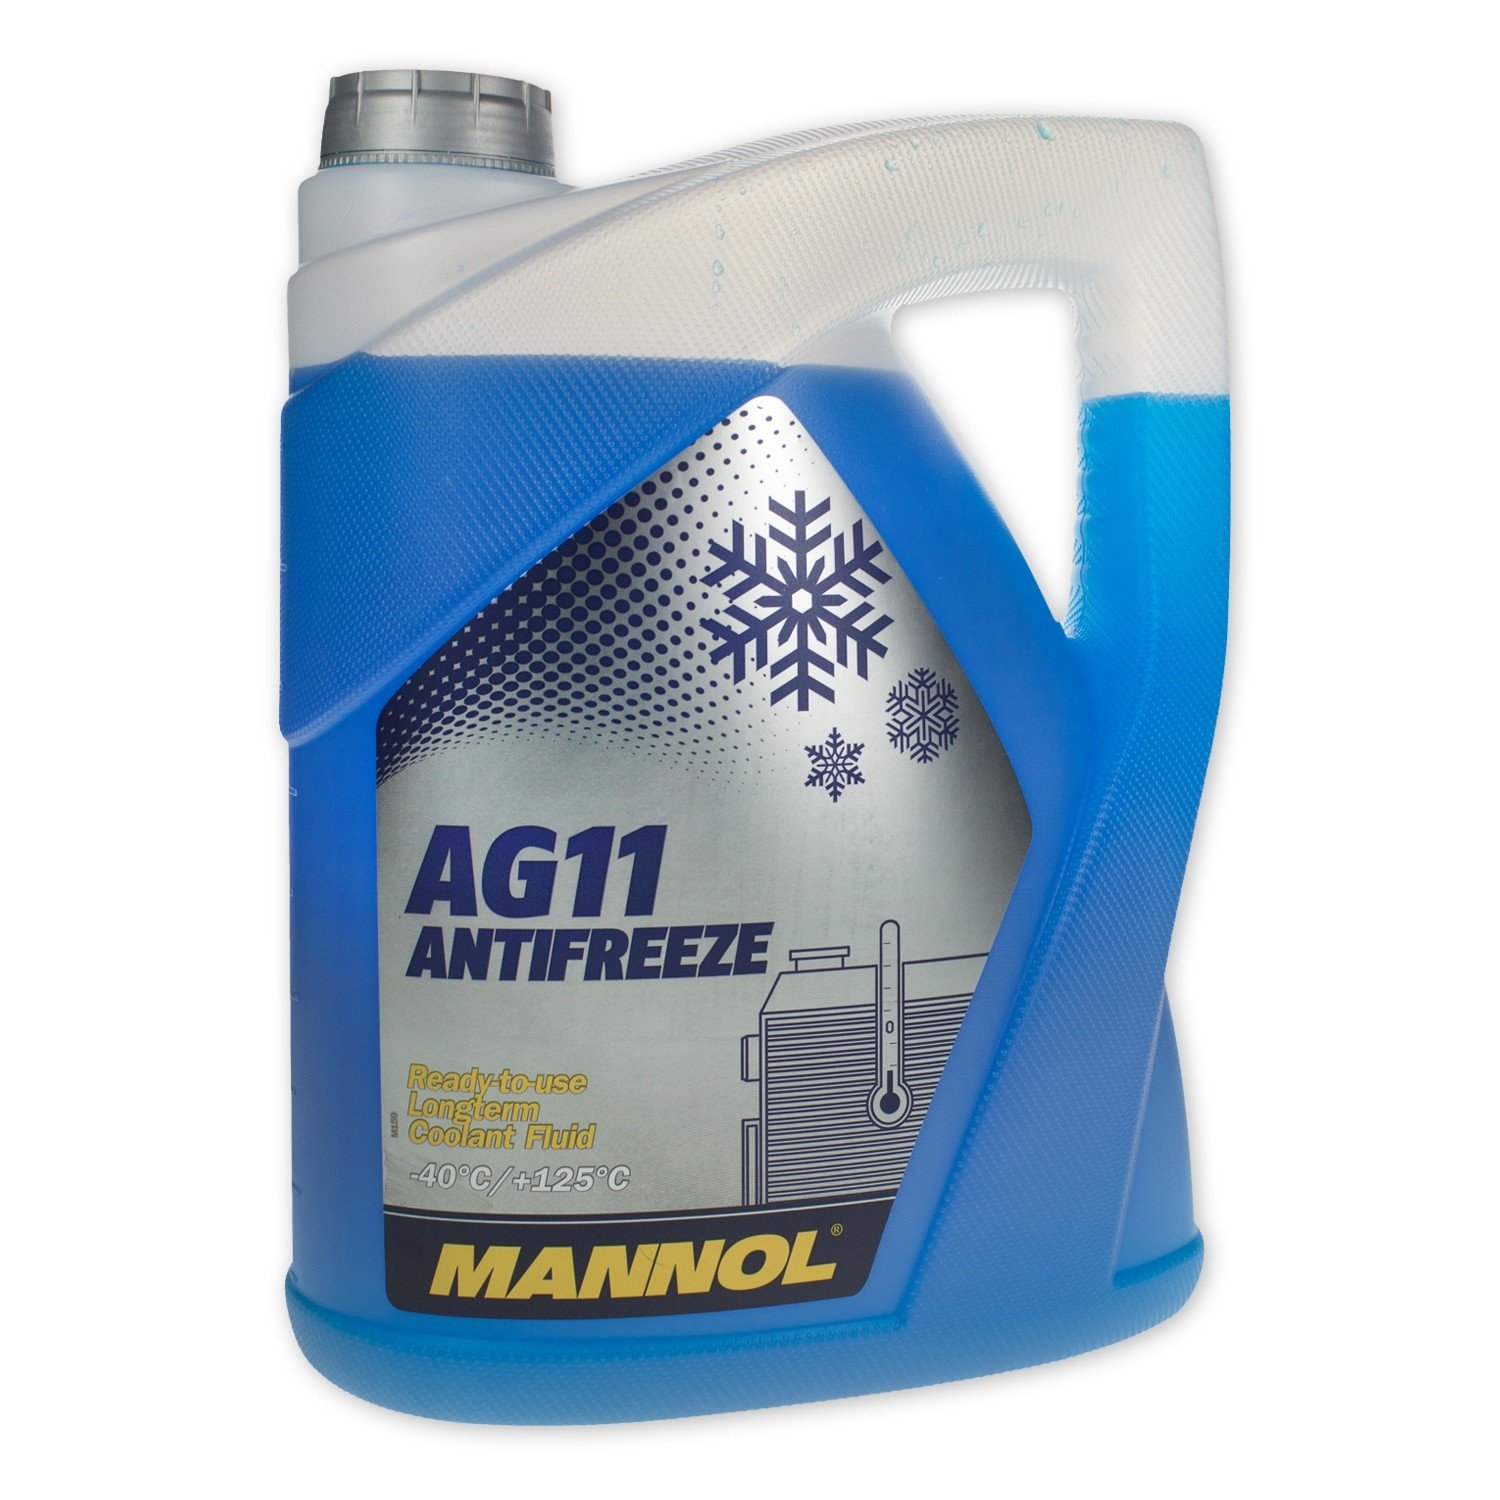 Mannol Antifreeze 4011 G11 -40°C 5L